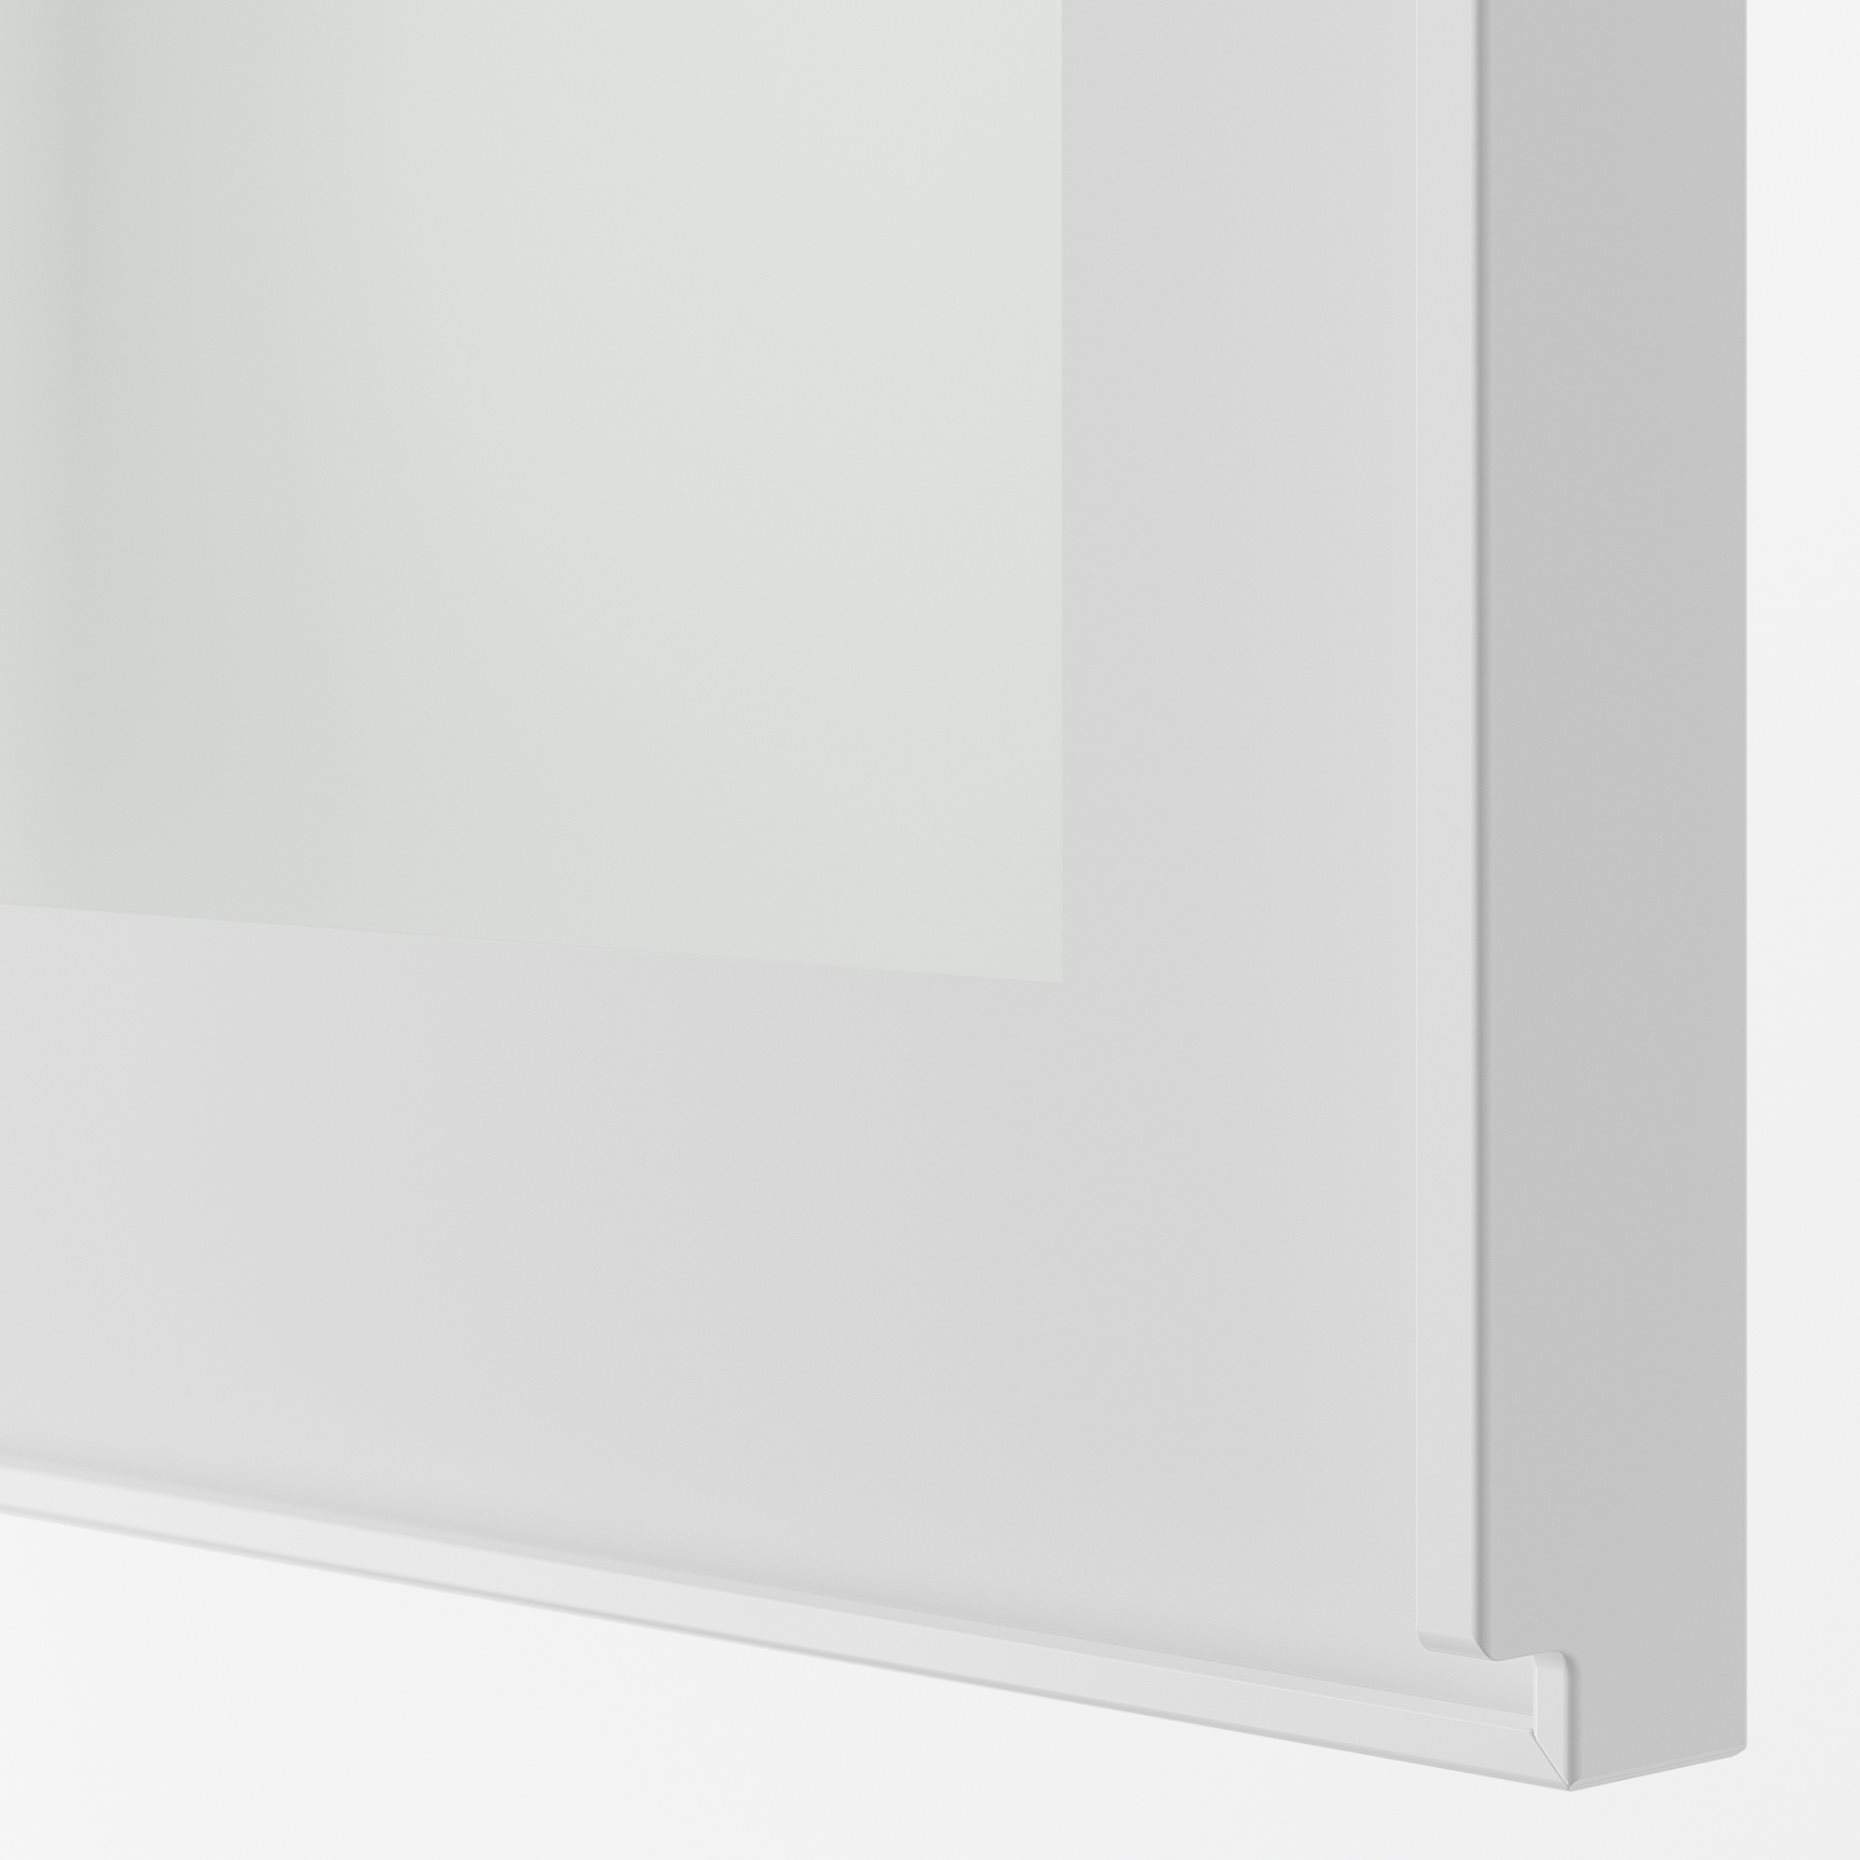 METOD, οριζόντιο ντουλάπι τοίχου/2 γυάλινες πόρτες με μηχανισμό πίεσης, 60x80 cm, 094.905.94